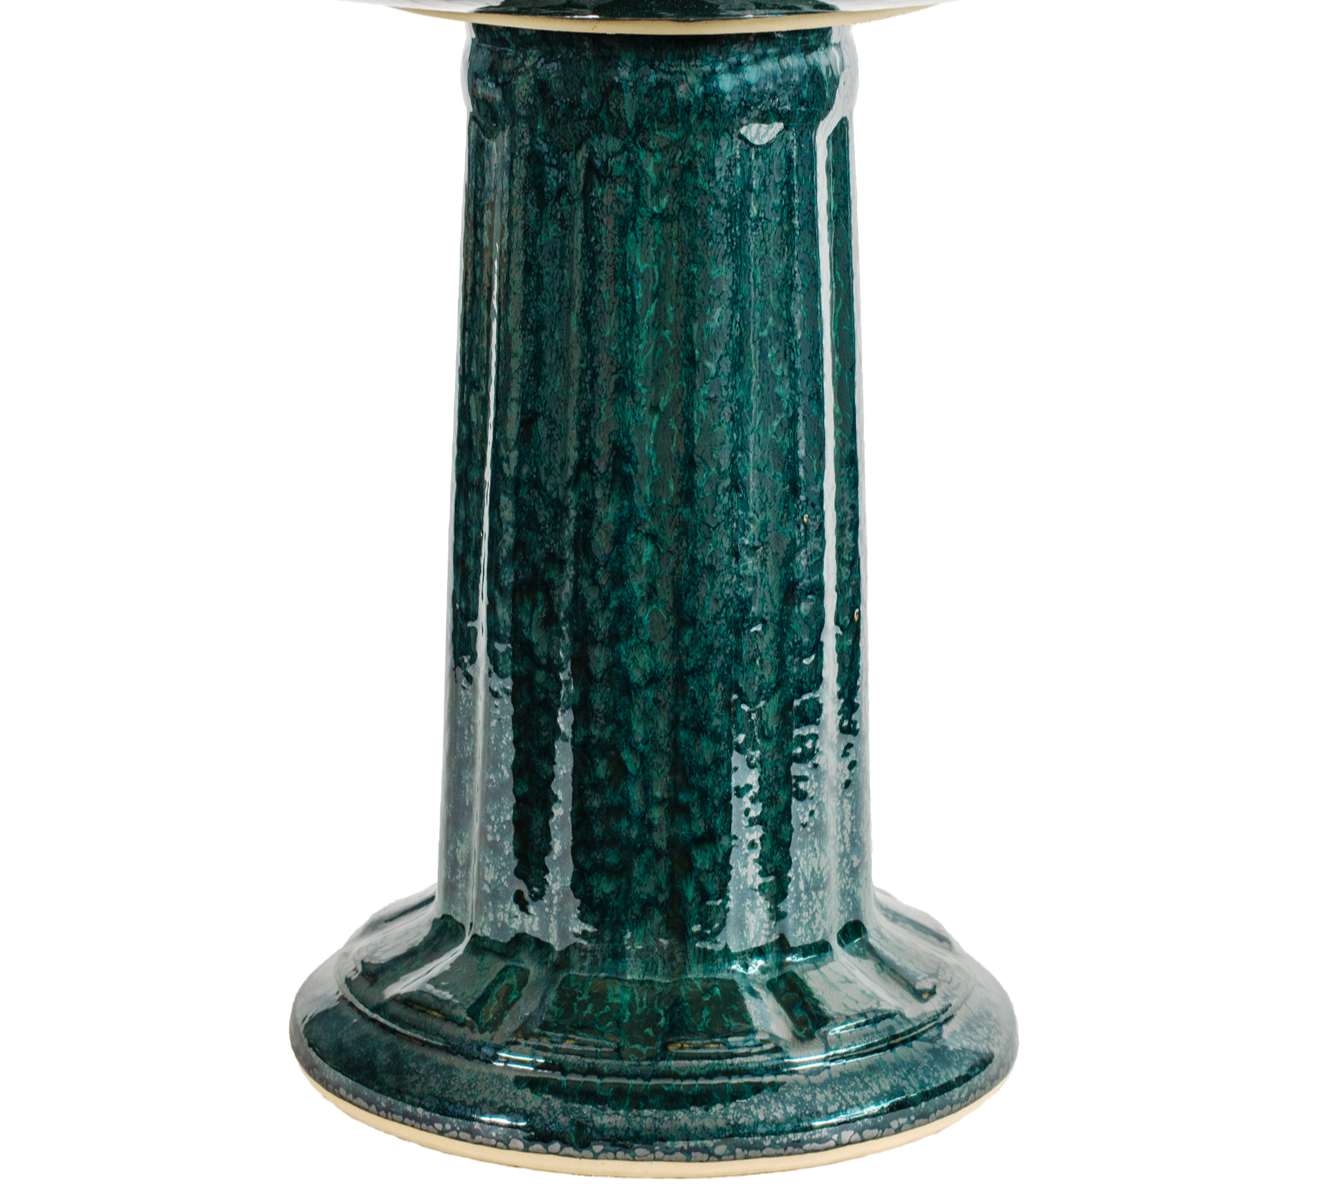 ceramic green birdbath pedestal with column design